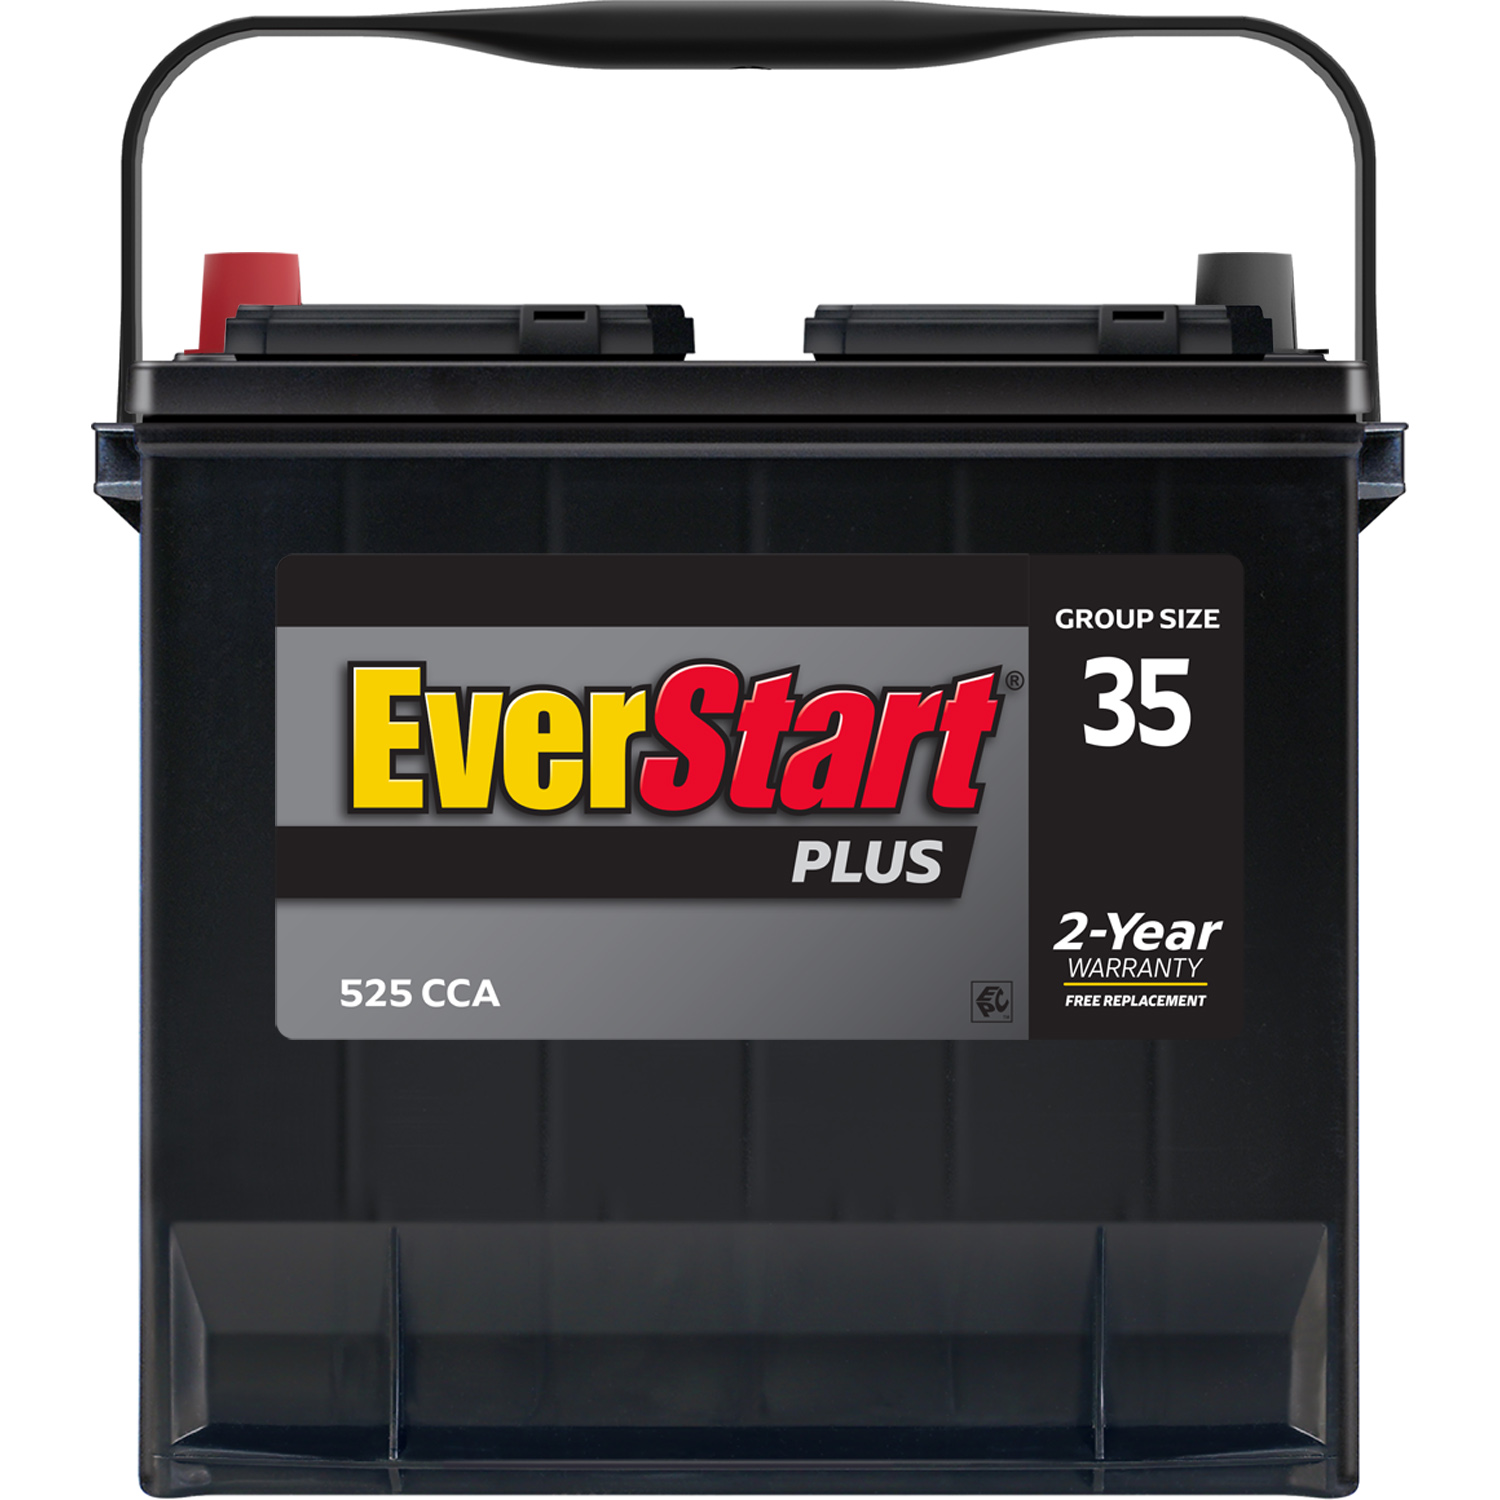 EverStart Plus Lead Acid Automotive Battery, Group Size 35 12 Volt, 525 CCA - image 3 of 7